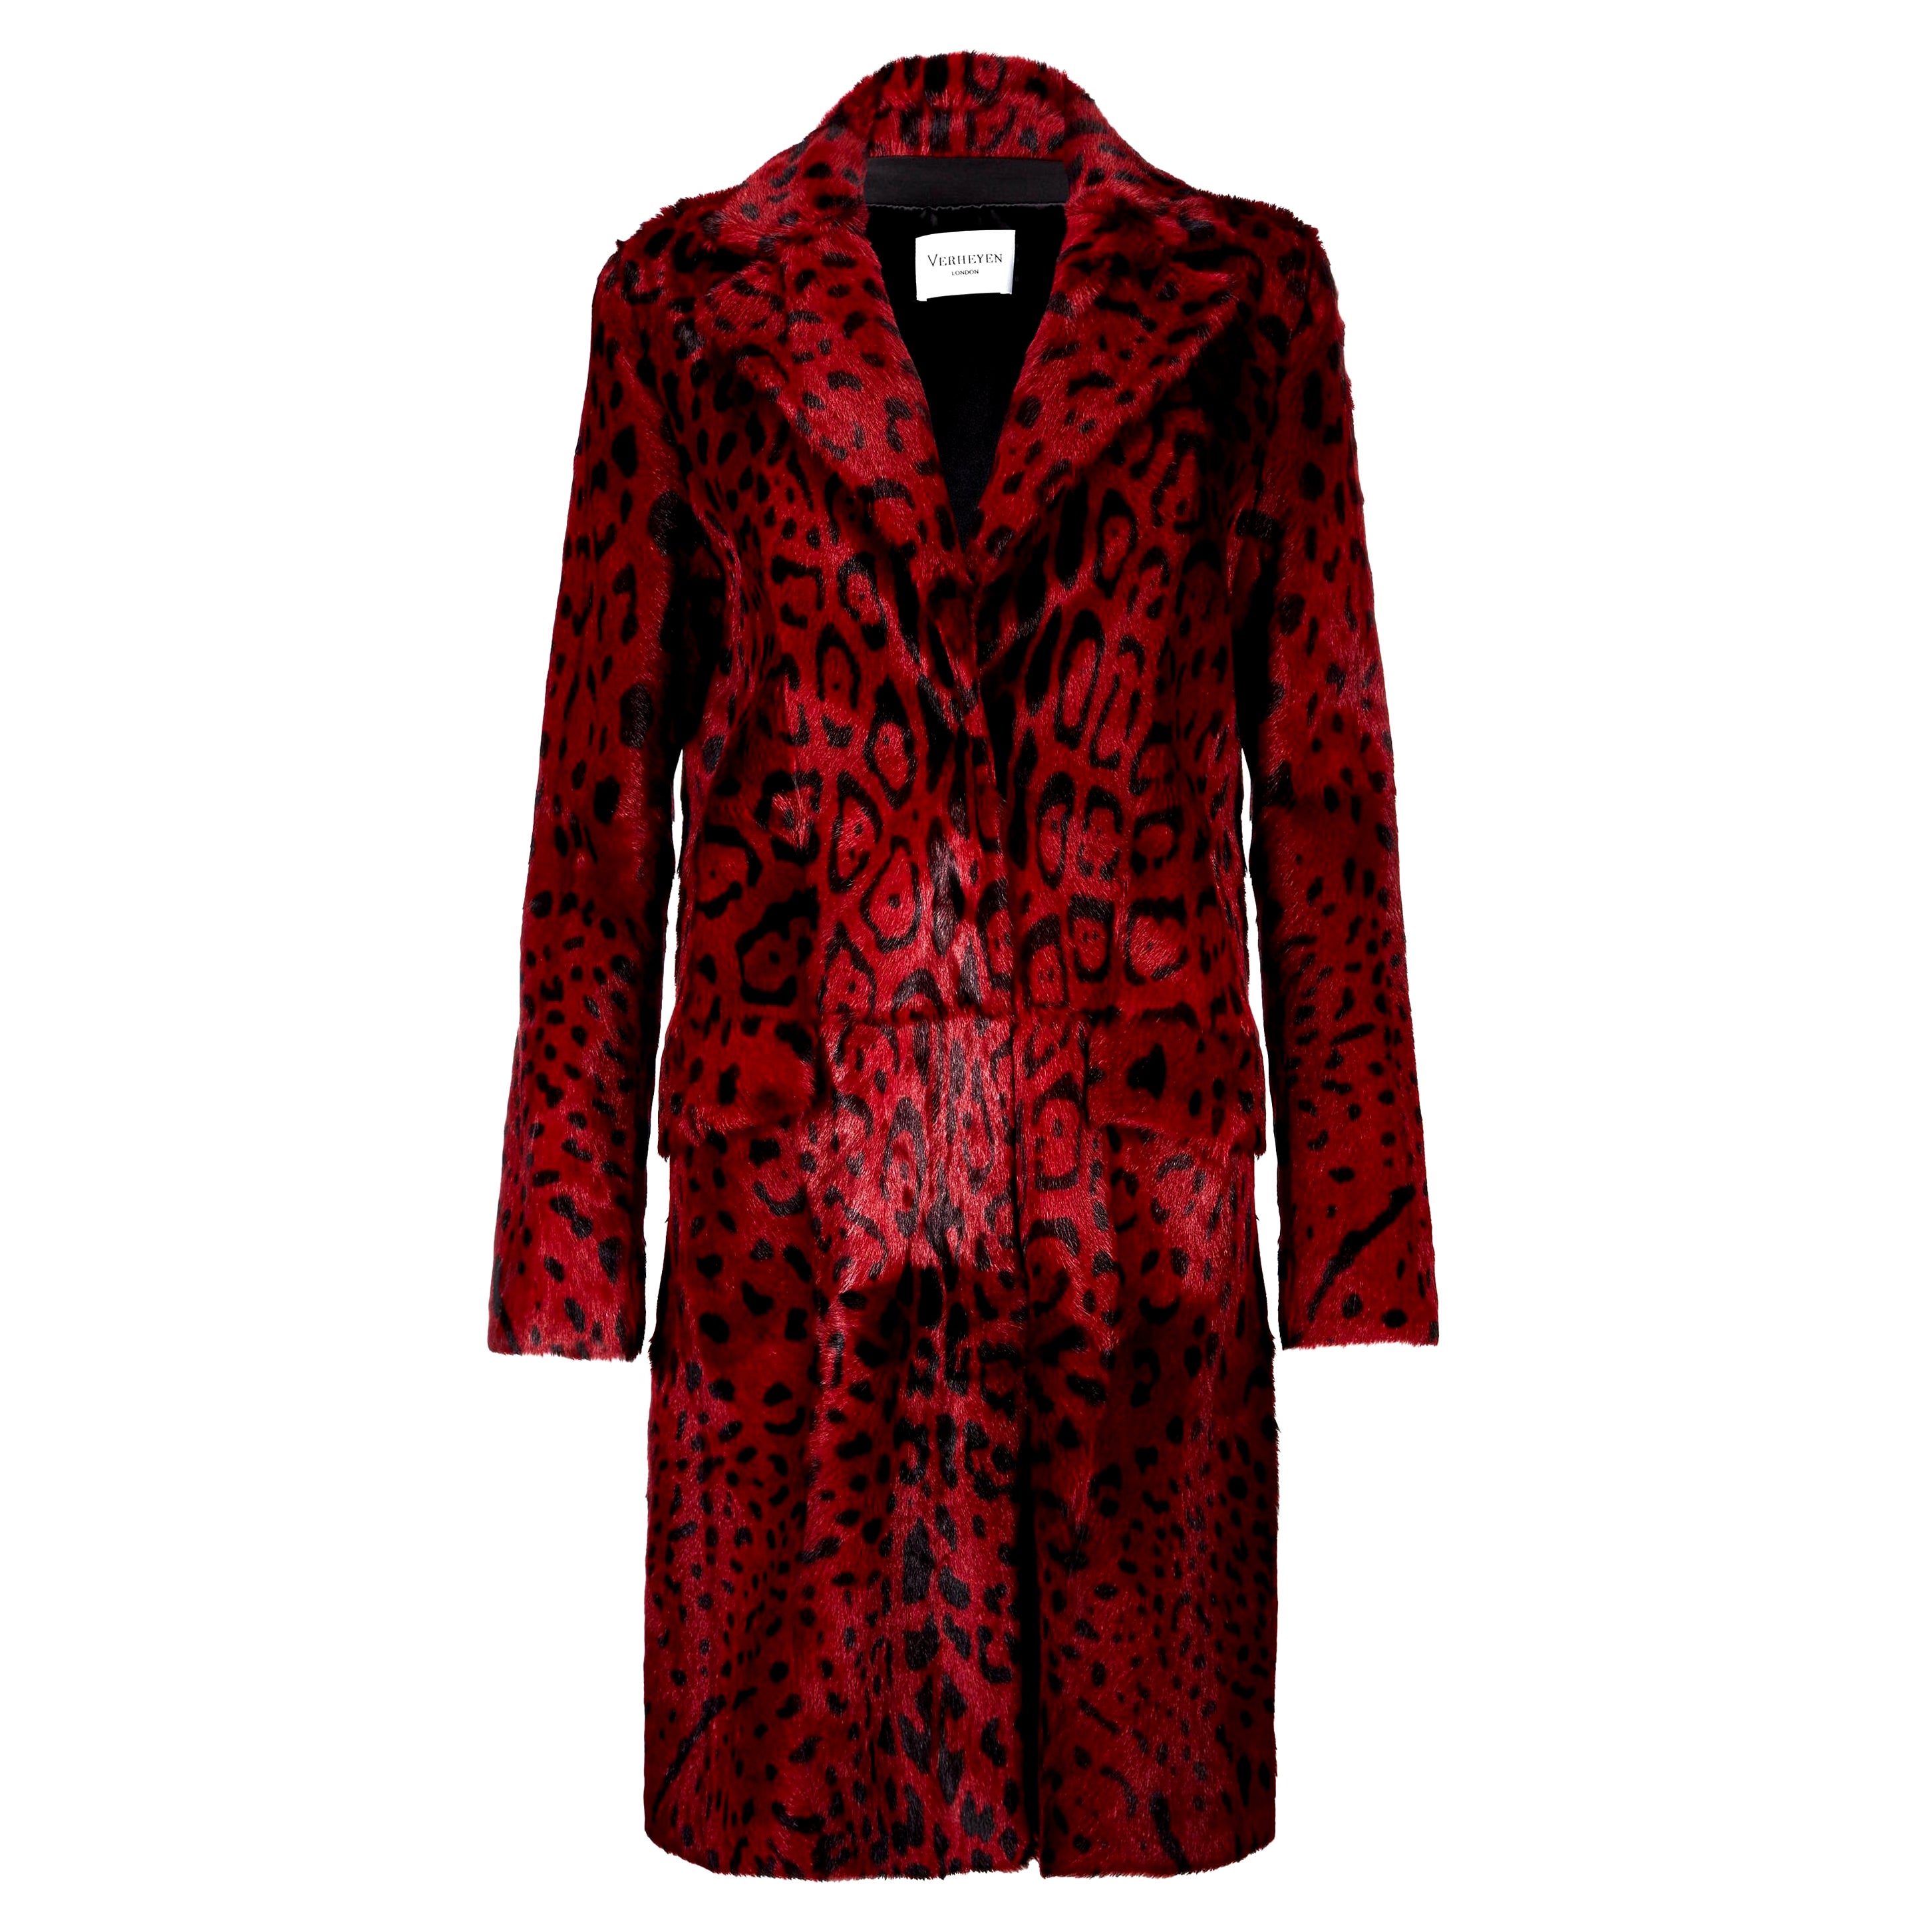 Verheyen London Leopard Print Coat in Red Ruby Goat Hair Fur UK 10